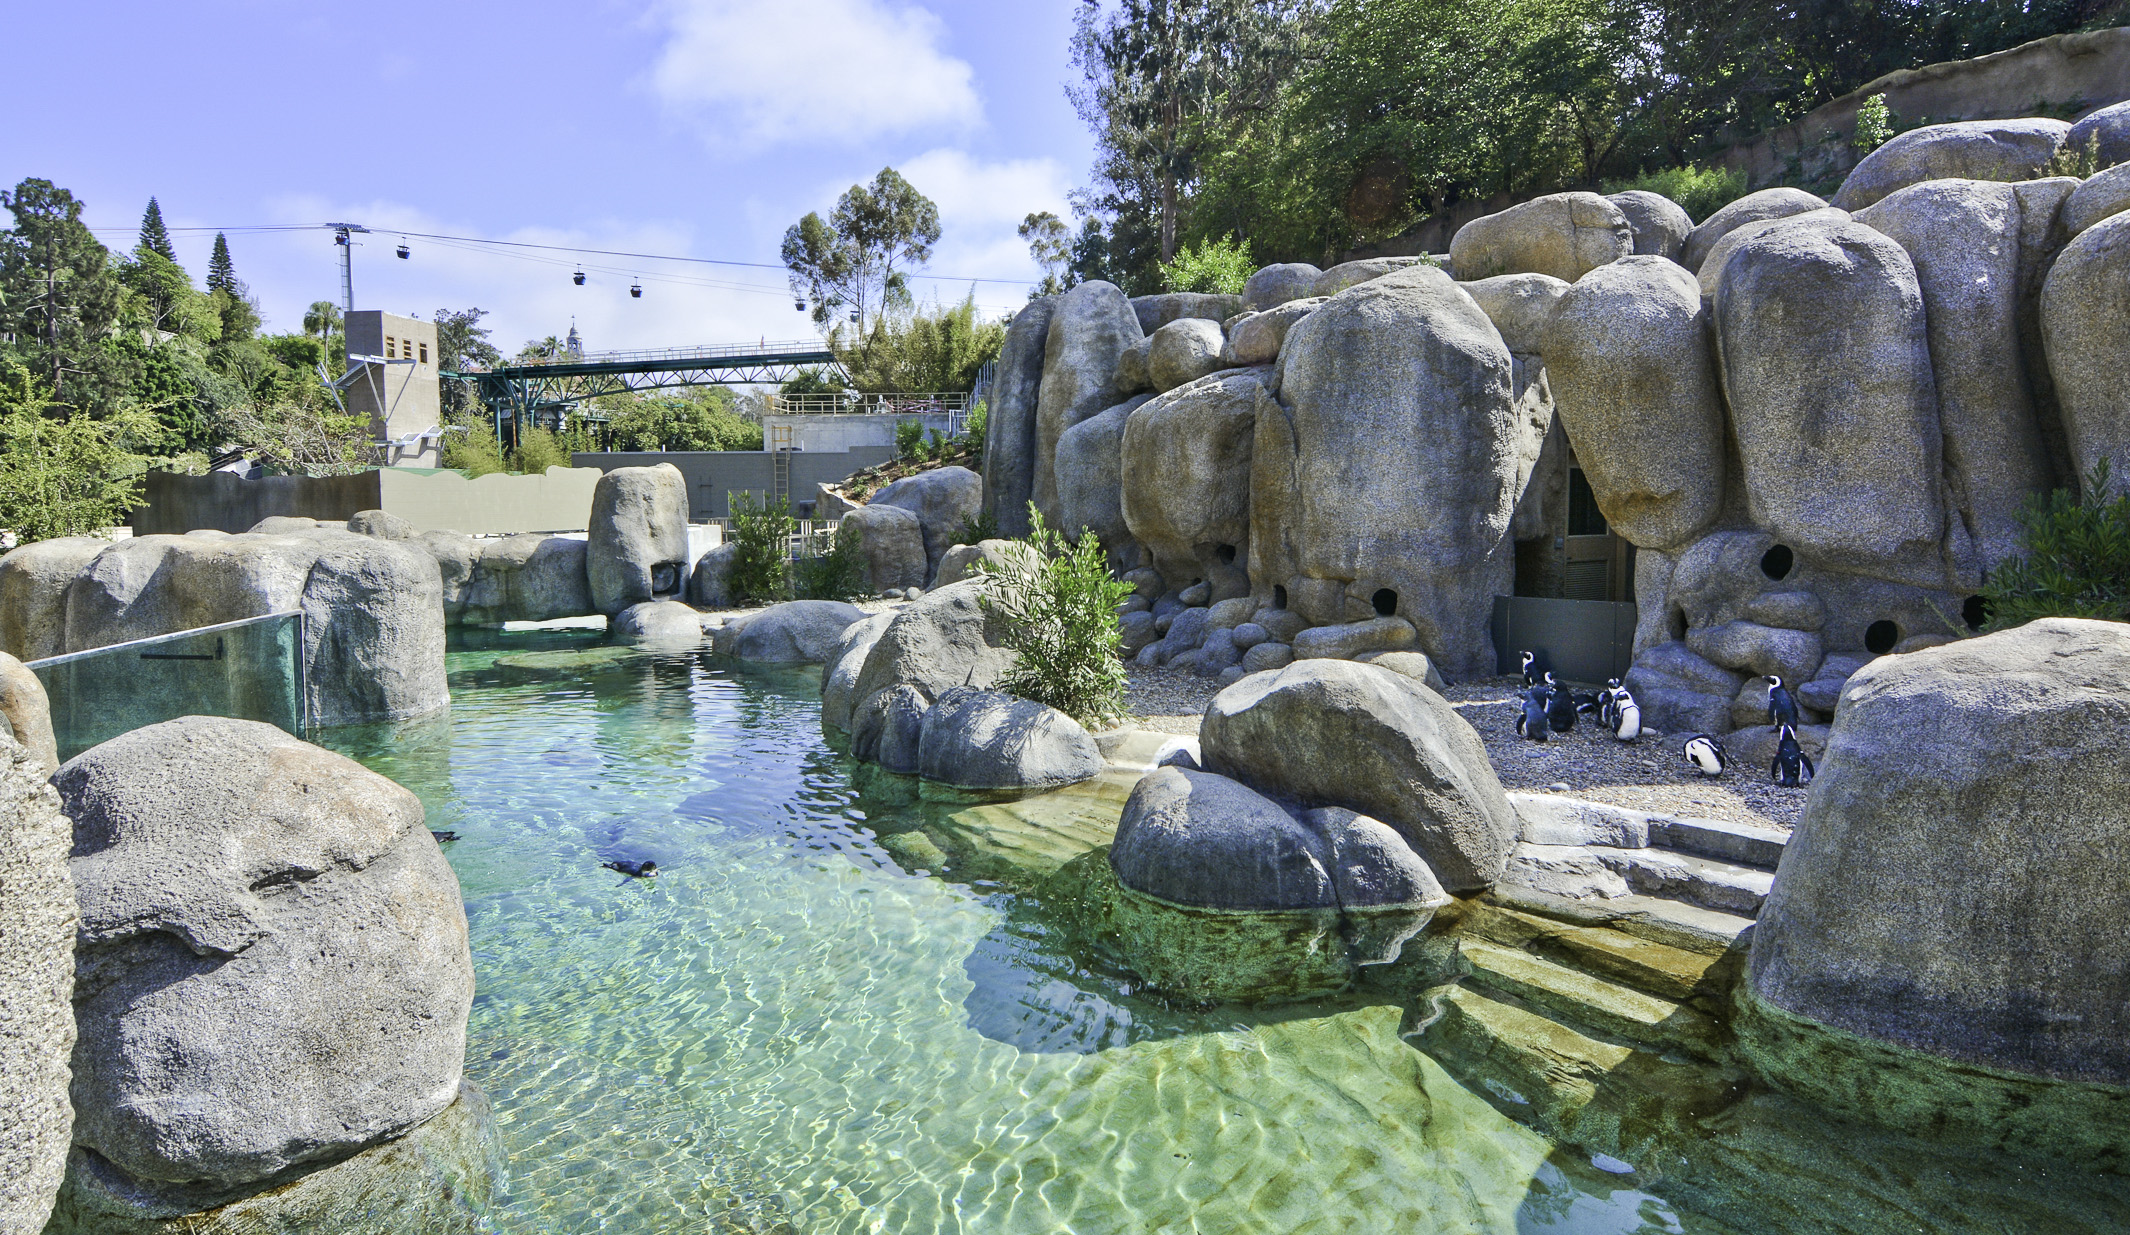 San Diego Zoo, Africa Rocks Exhibit